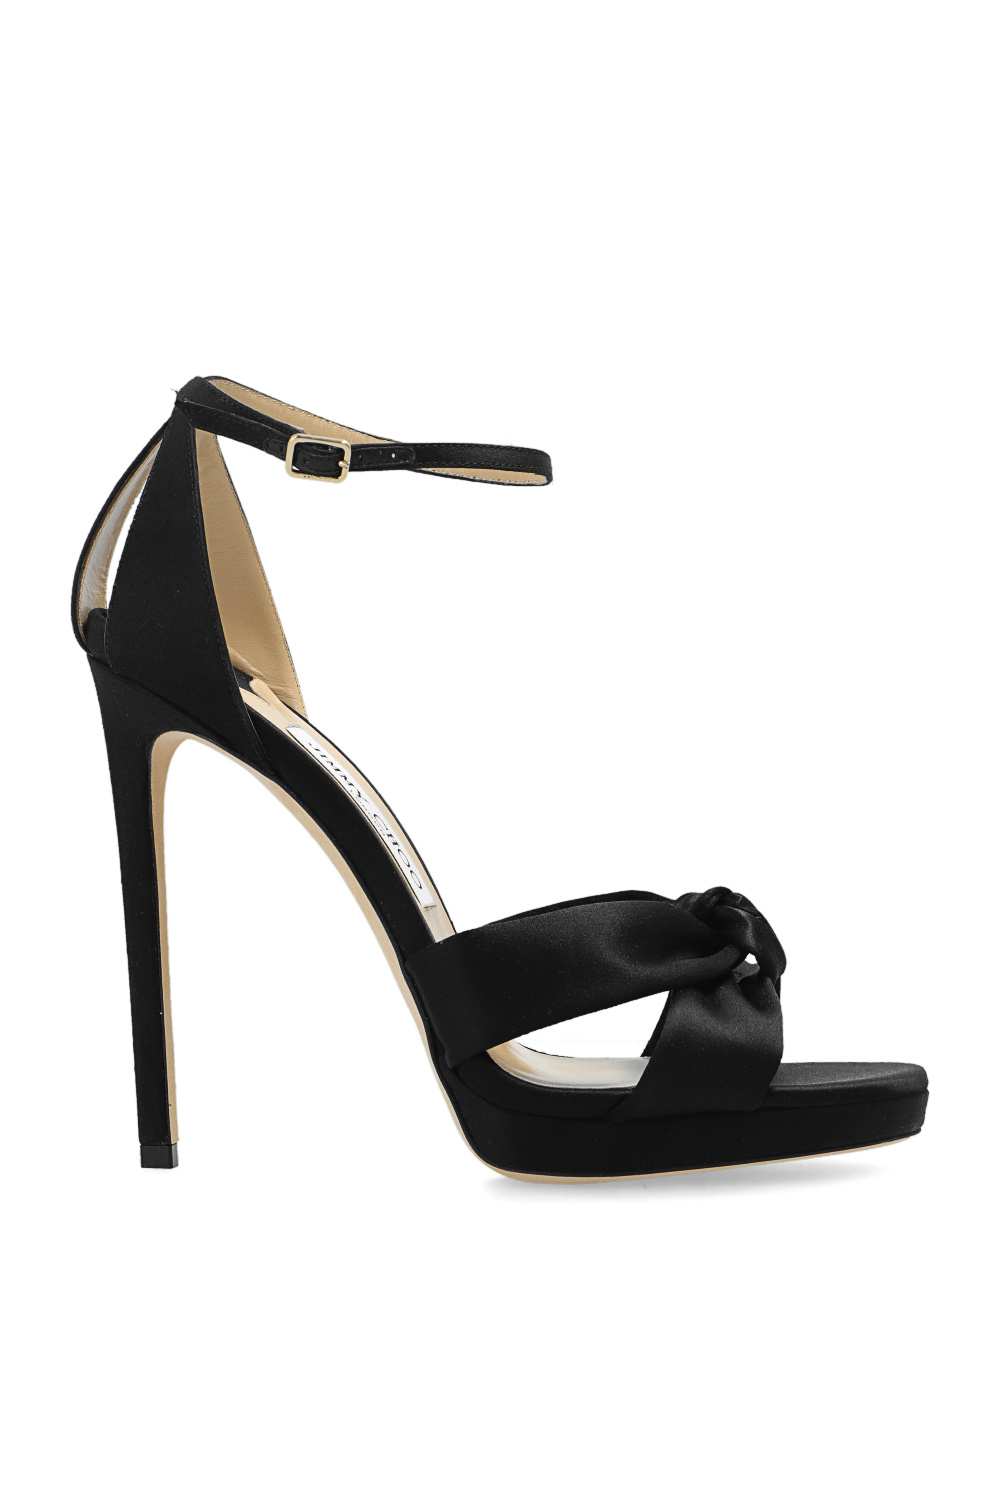 ‘Rosie’ satin heeled sandals Jimmy Choo - Vitkac Spain